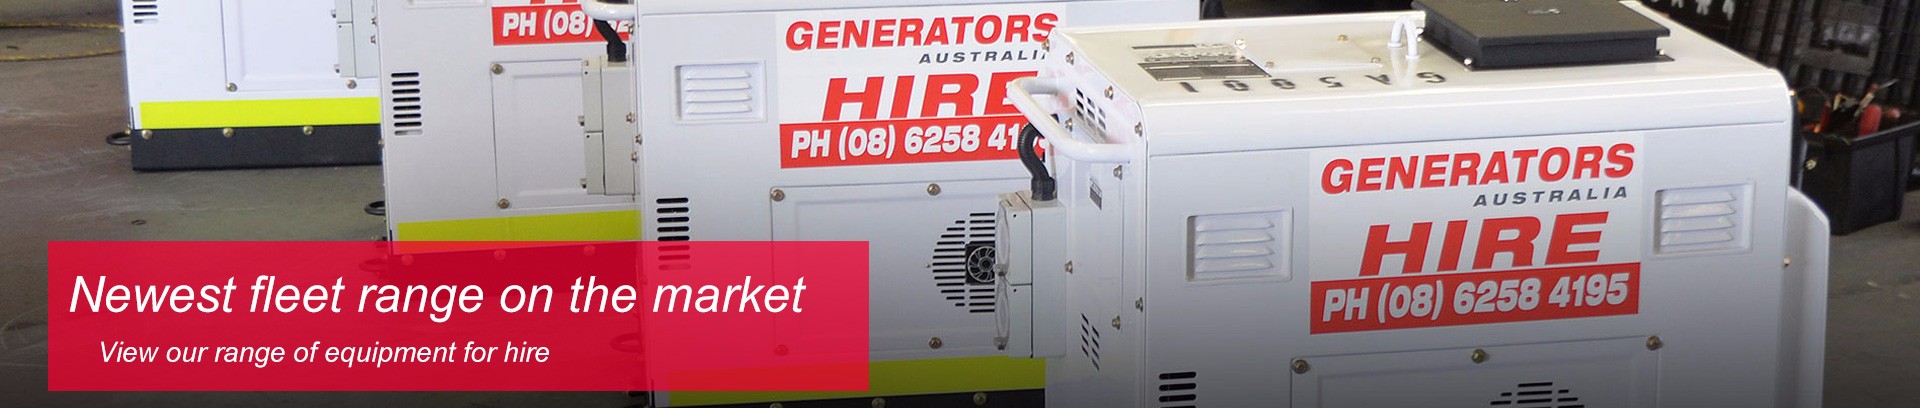 03-generators-australia-image-hire